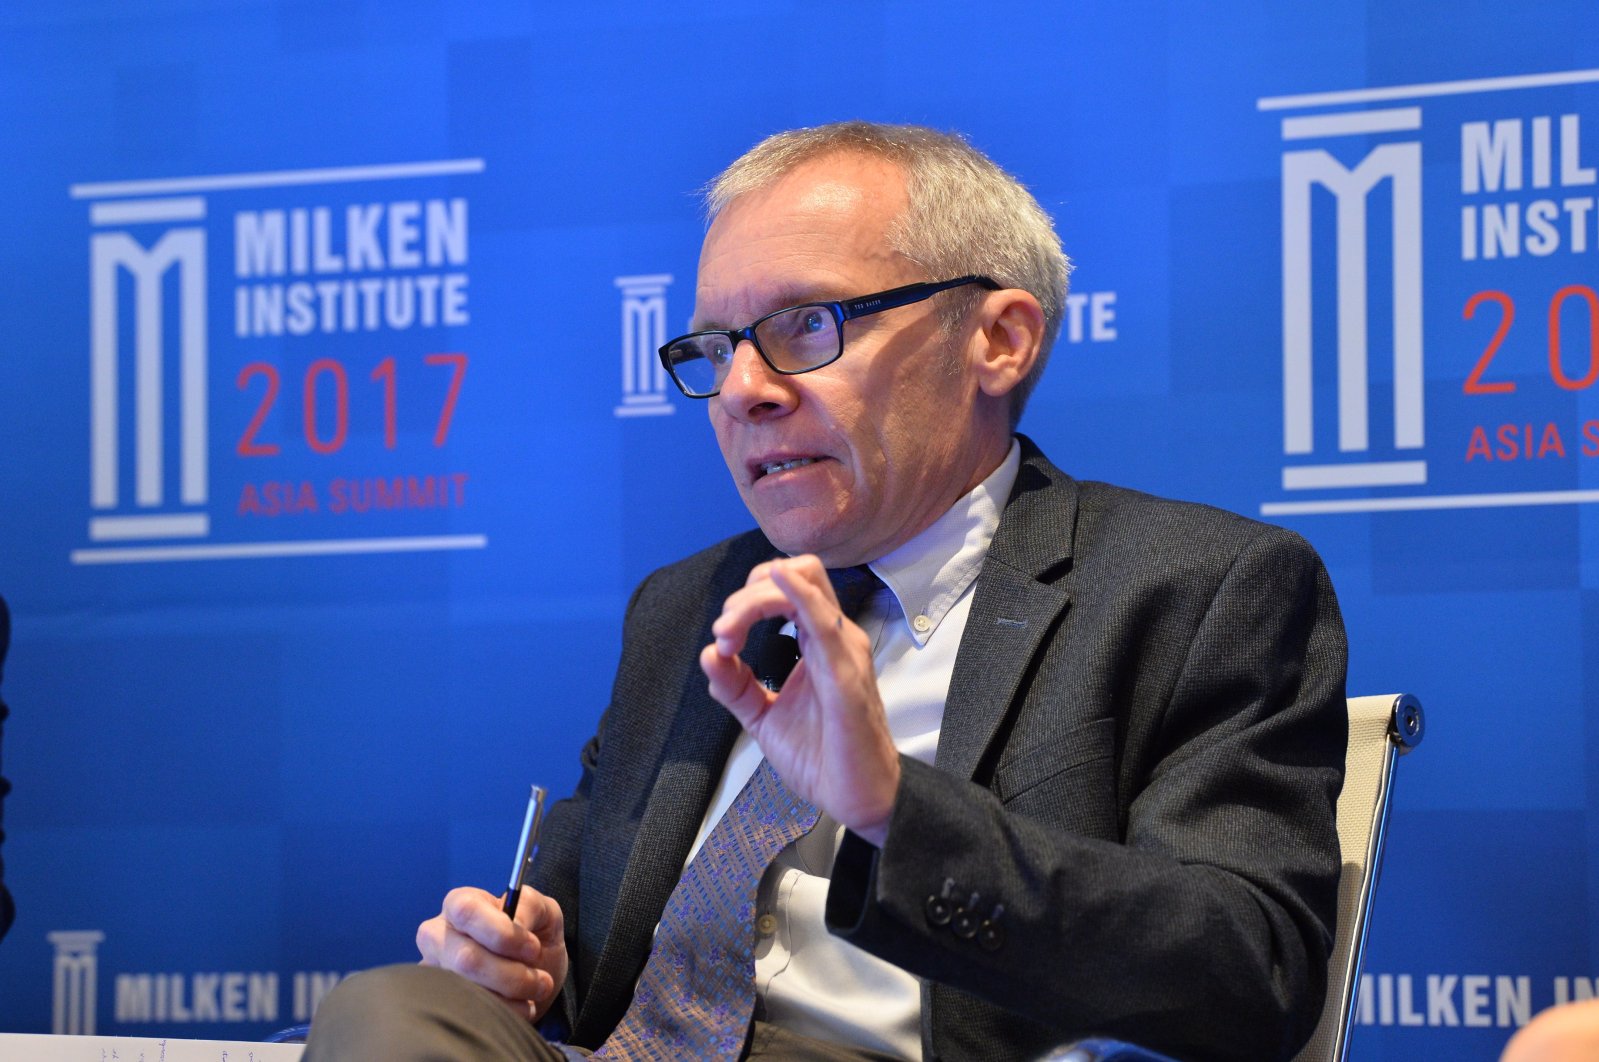 Australian professor Sean Turnell at the Milken Institute 2017 Asia Summit in Singapore, Sept.15 2017. (EPA Photo)